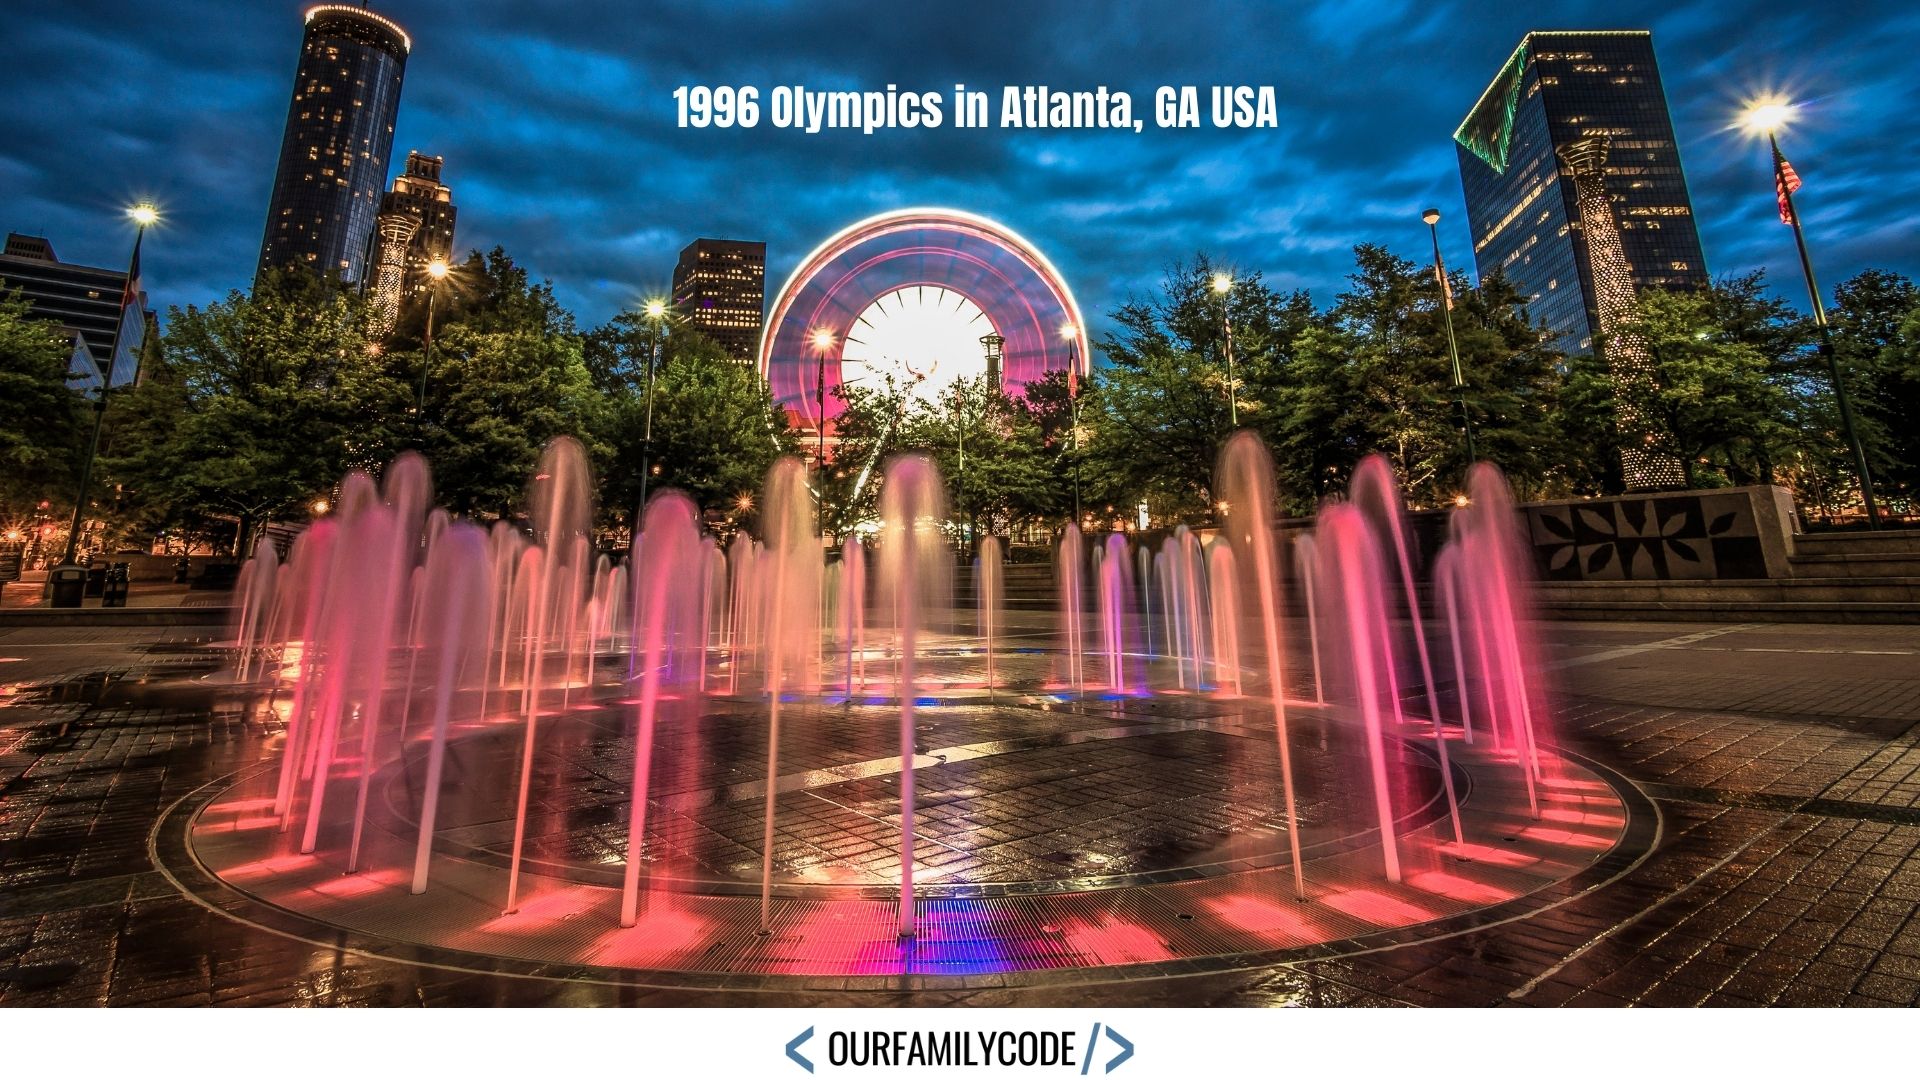 The Centennial Olympic Park Fountains built for the 1996 Summer Olympics in Atlanta, Georgia.